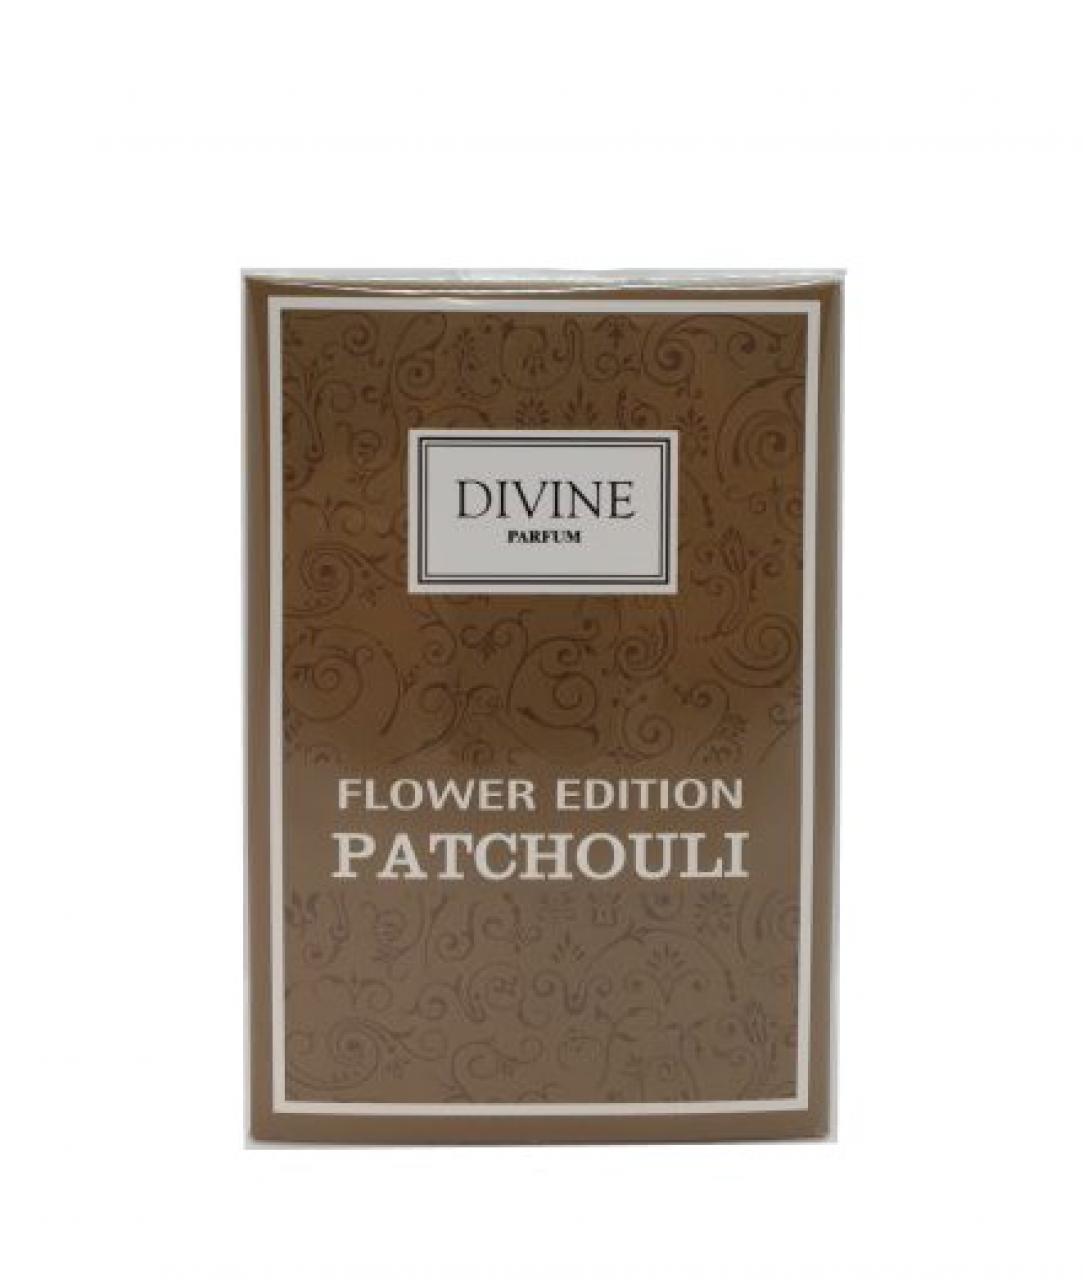 DIVINE PARFUM – FLOWER EDITION PATCHOULI